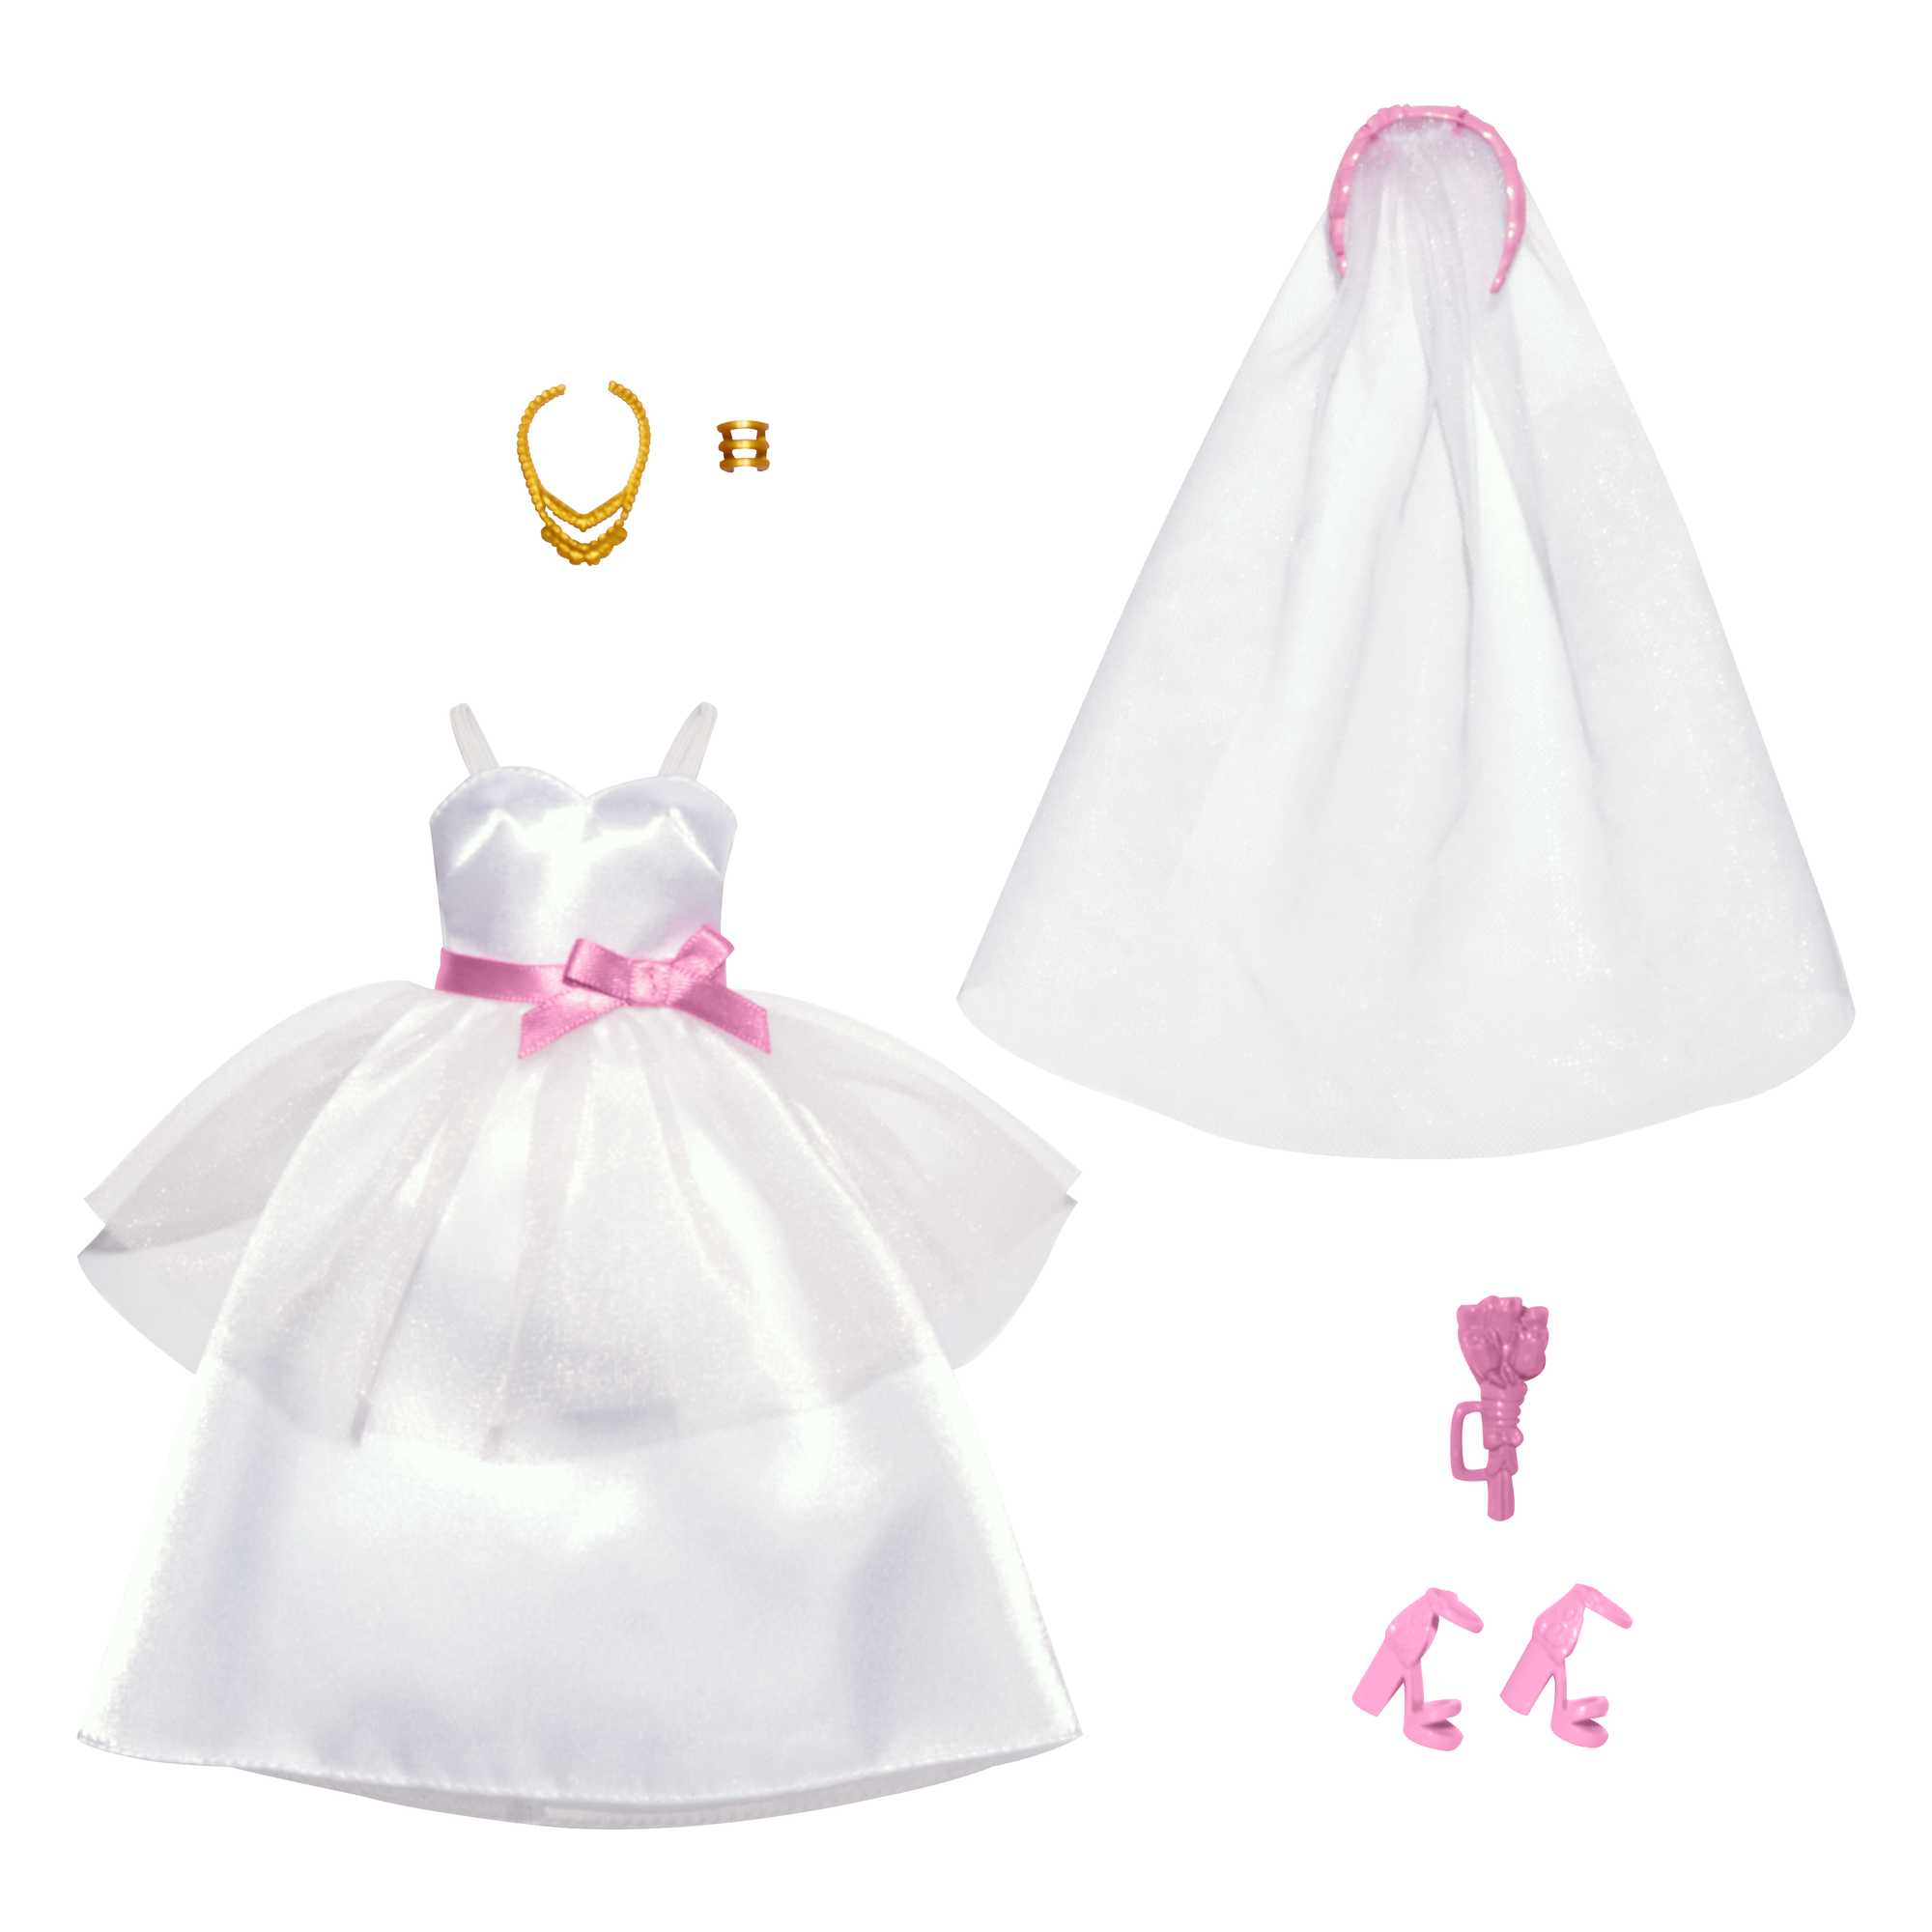 Mattel-Barbie Accessories - Bride - White Dress - Pink Accessories-HJT37-Legacy Toys